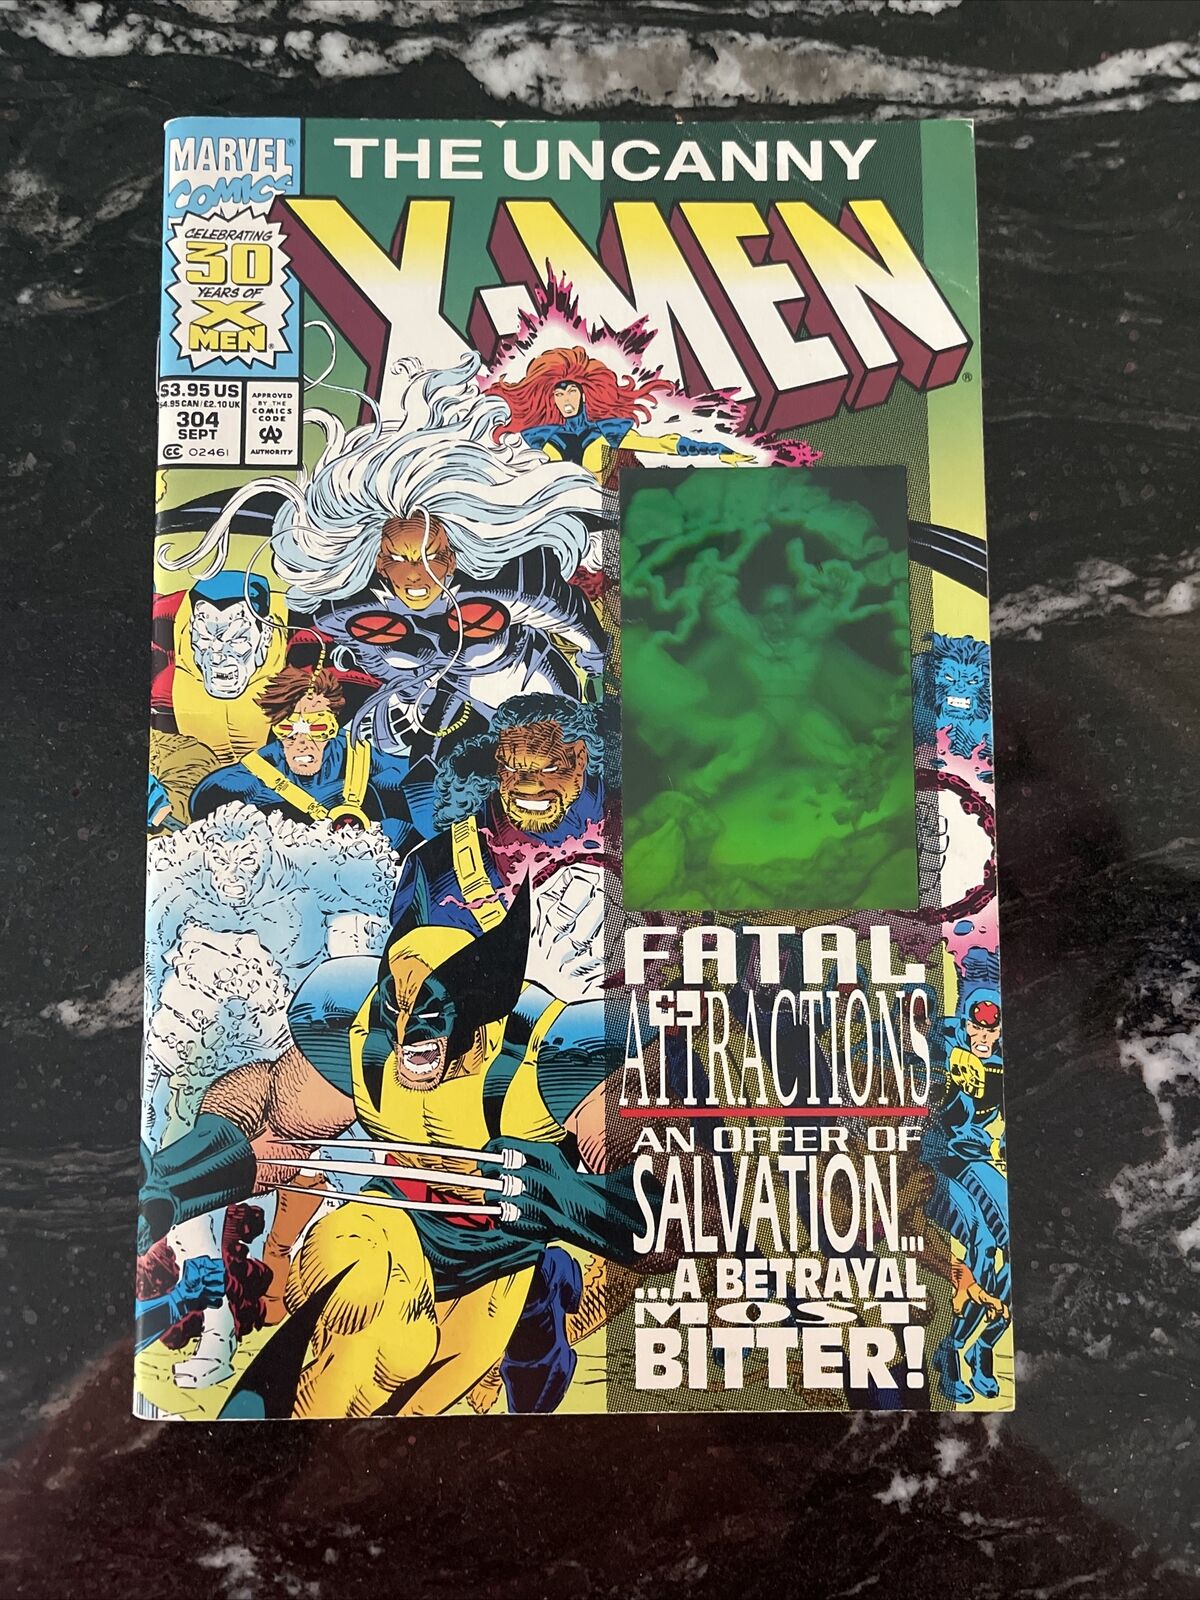 The Uncanny X-Men #304 (Marvel Comics September 1993)